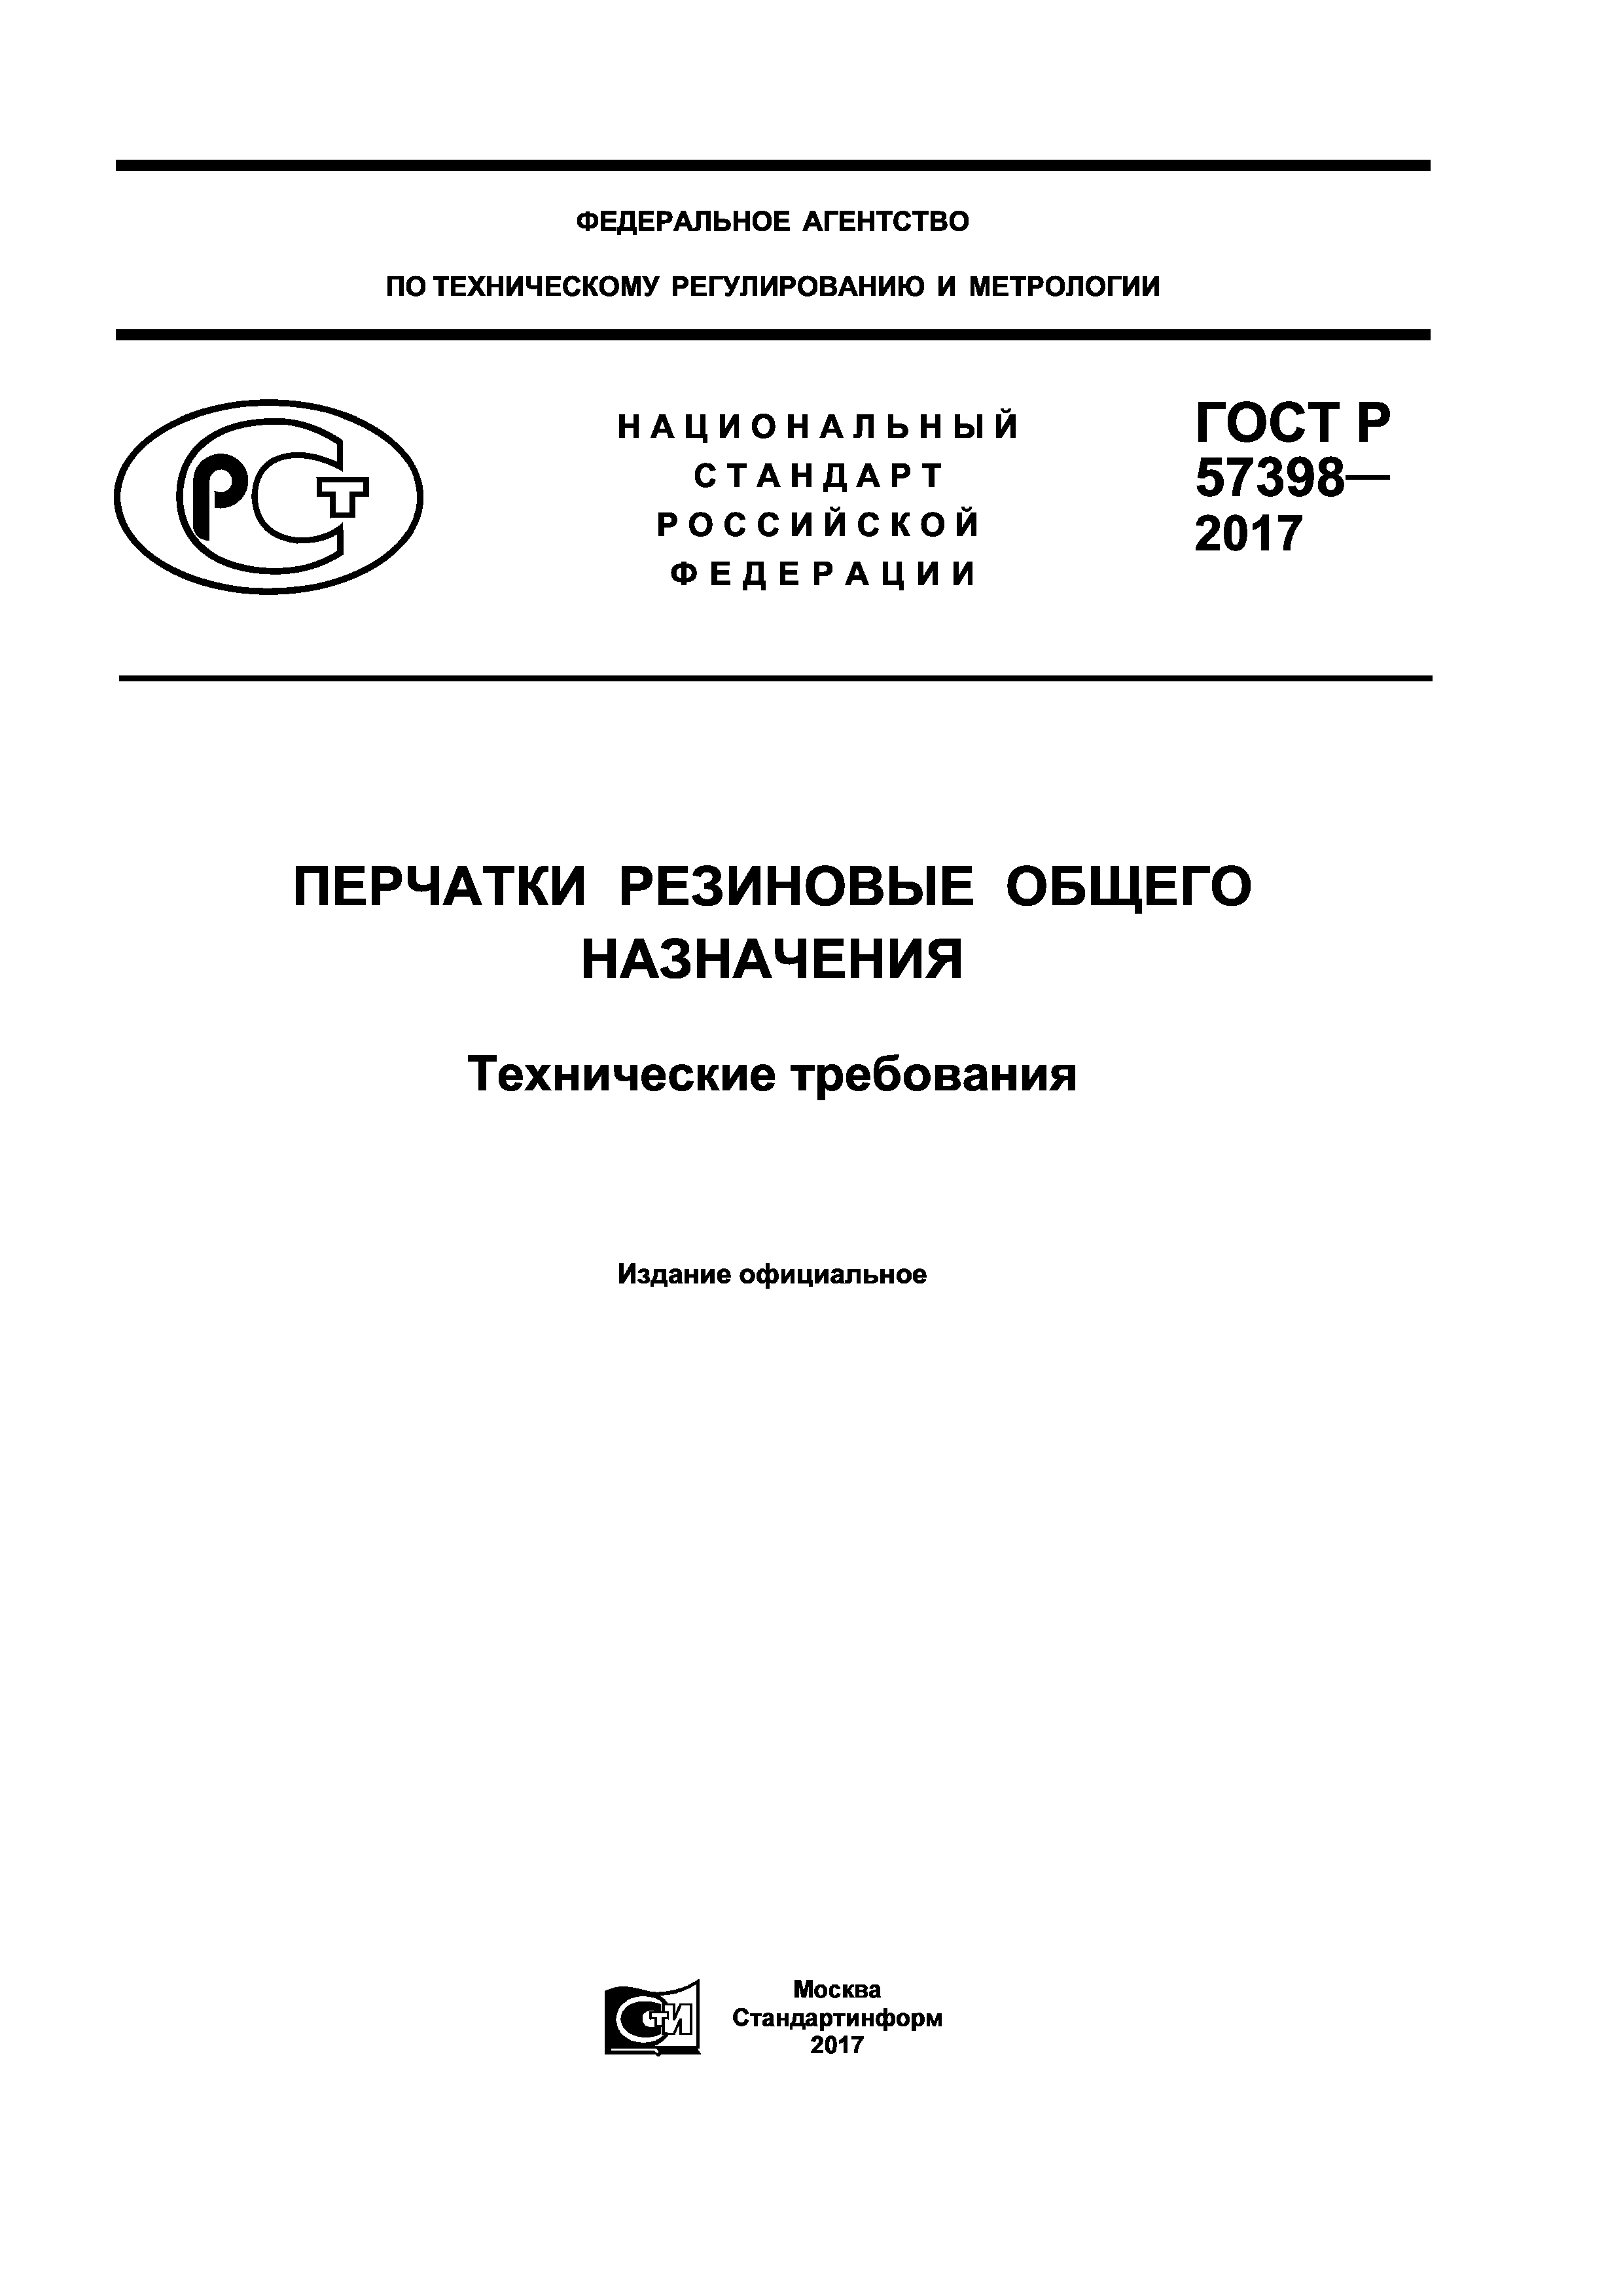 ГОСТ Р 57398-2017